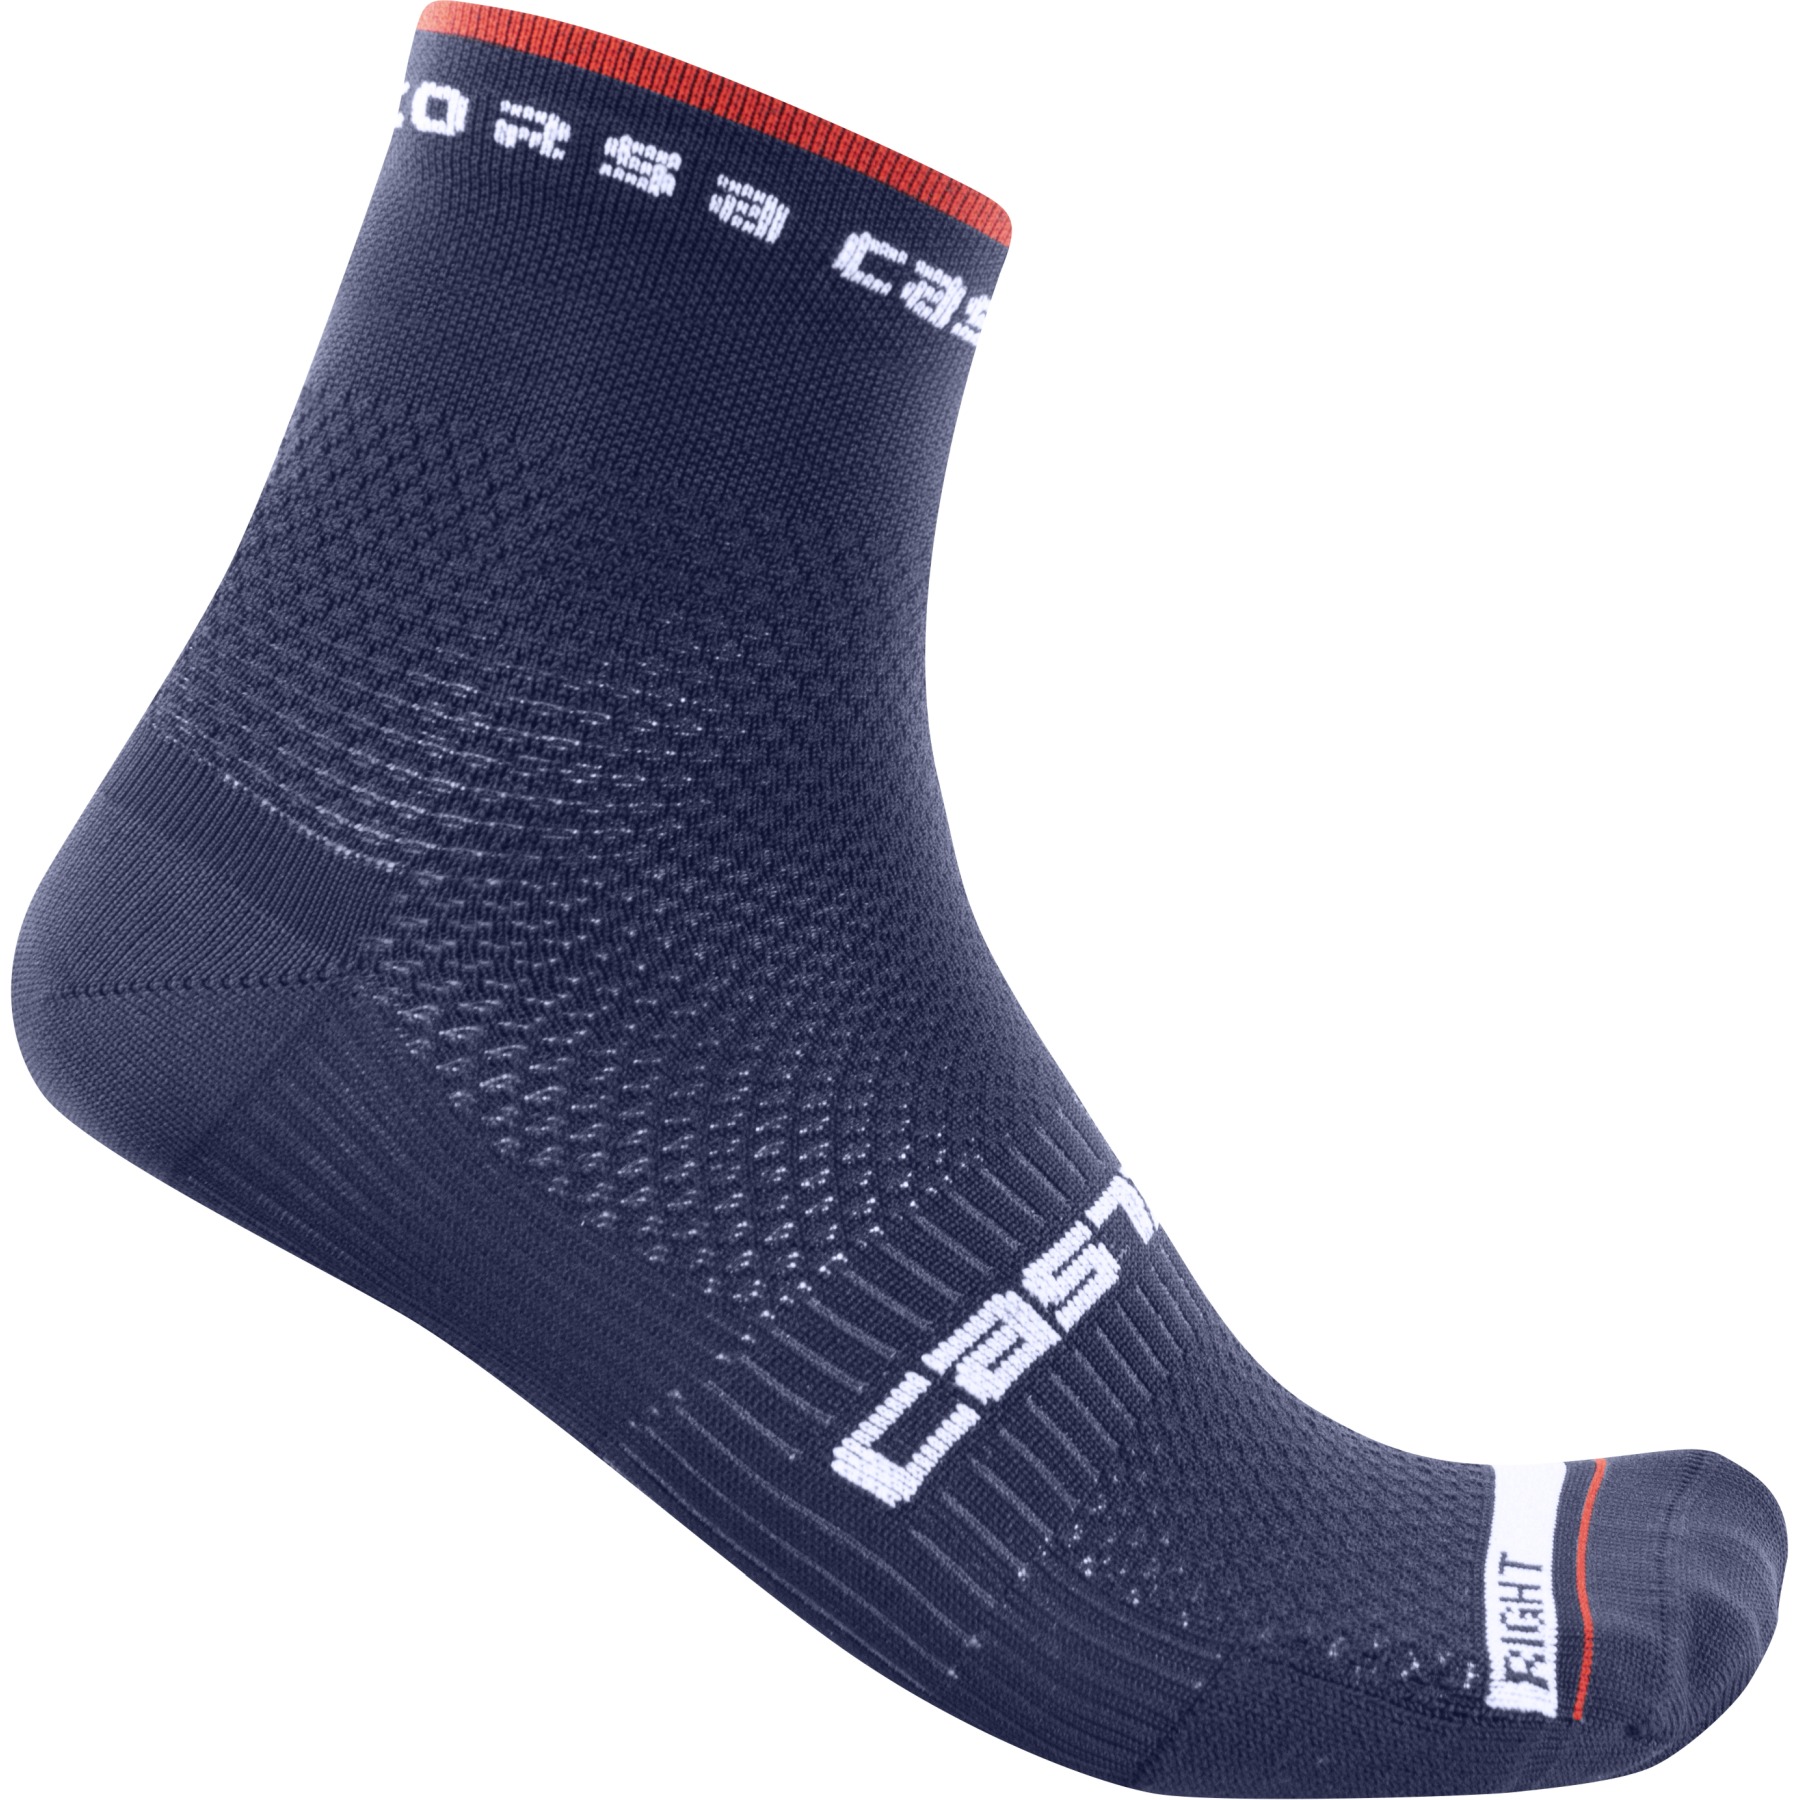 Image of Castelli Rosso Corsa Pro 9 Socks - belgian blue 424